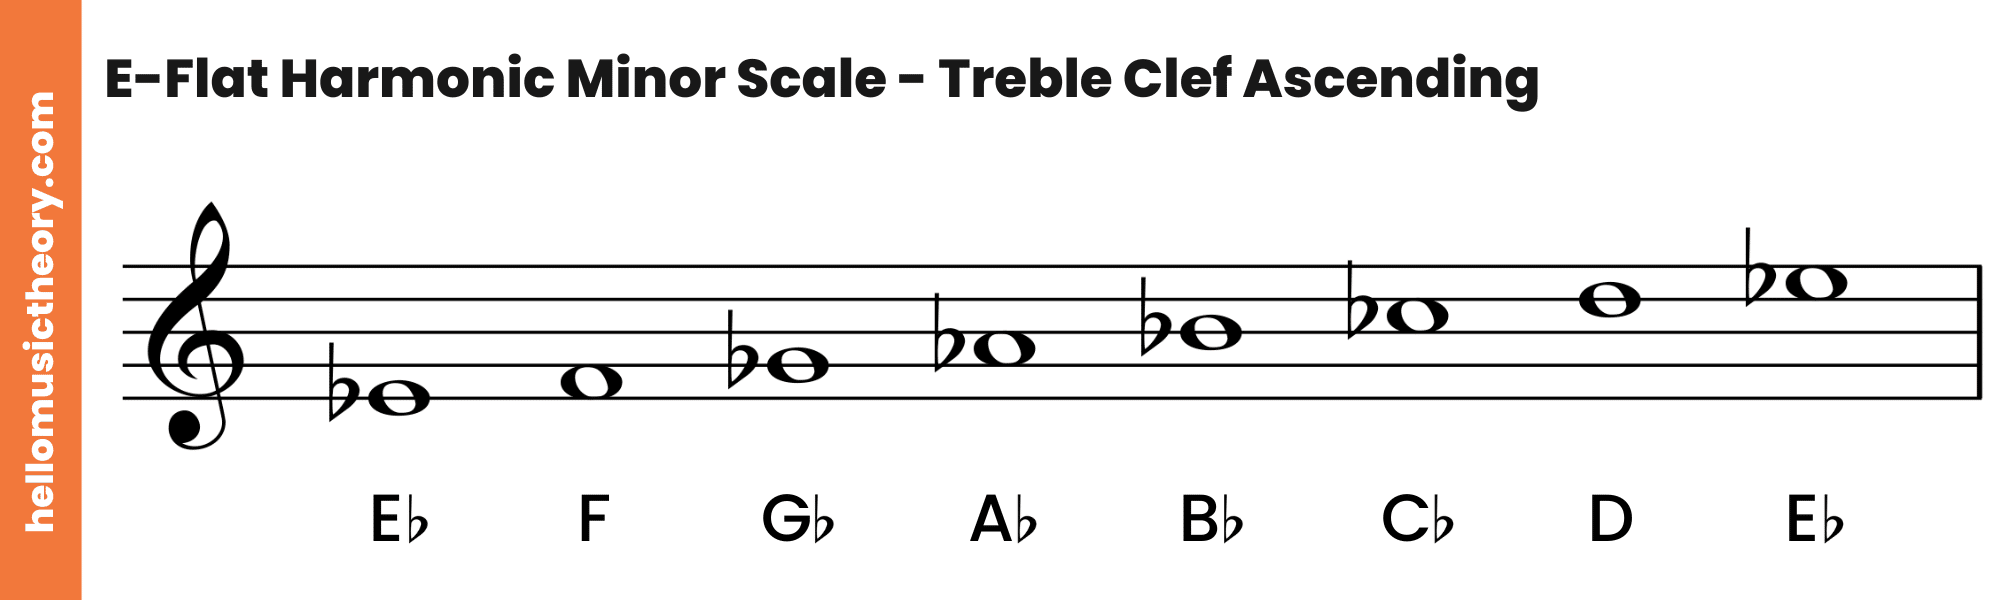 E-Flat Harmonic Minor Scale Treble Clef Ascending